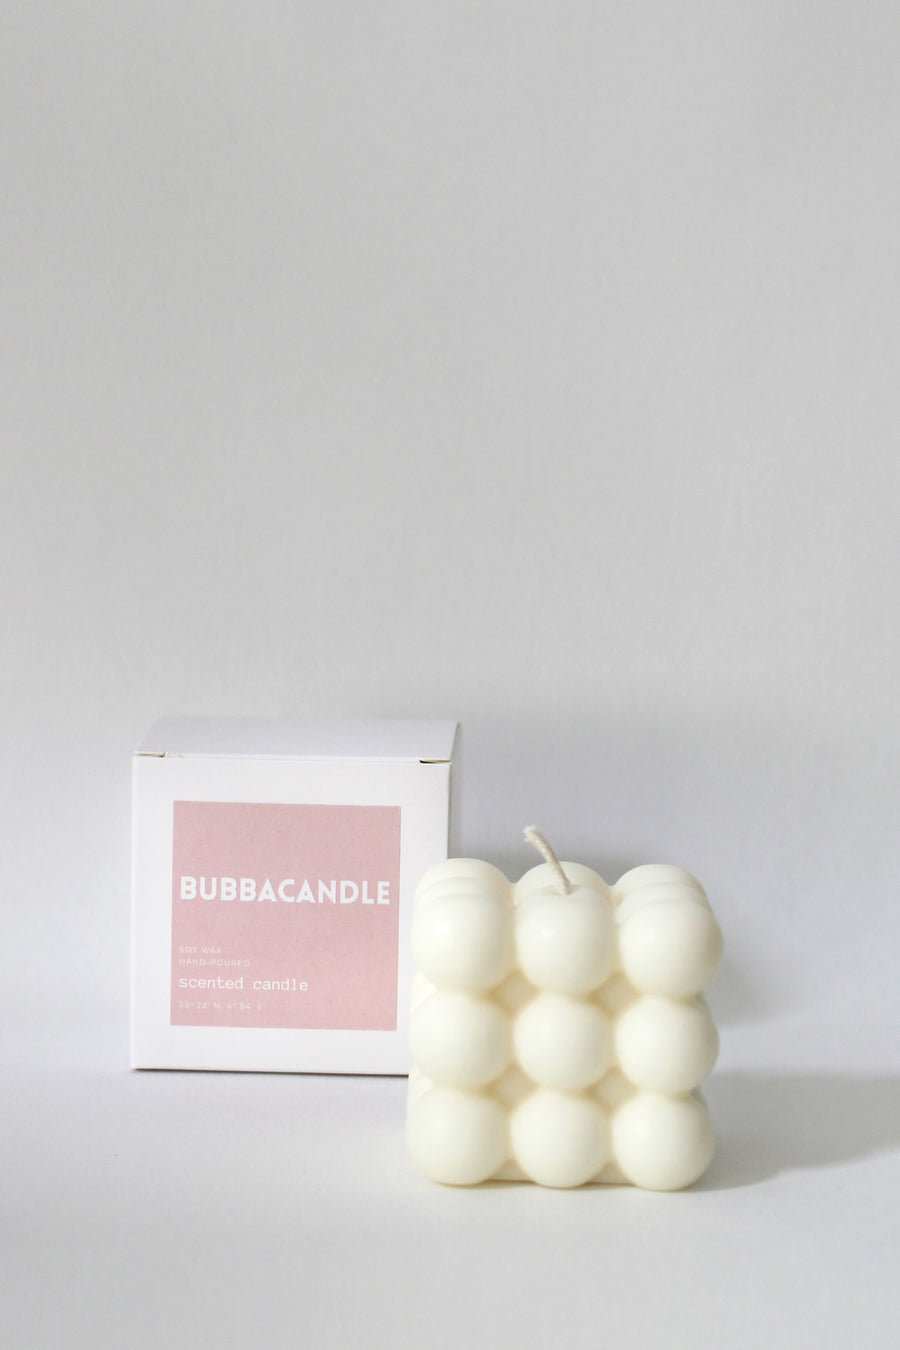 BUBBACANDLE - The Cream Bubble